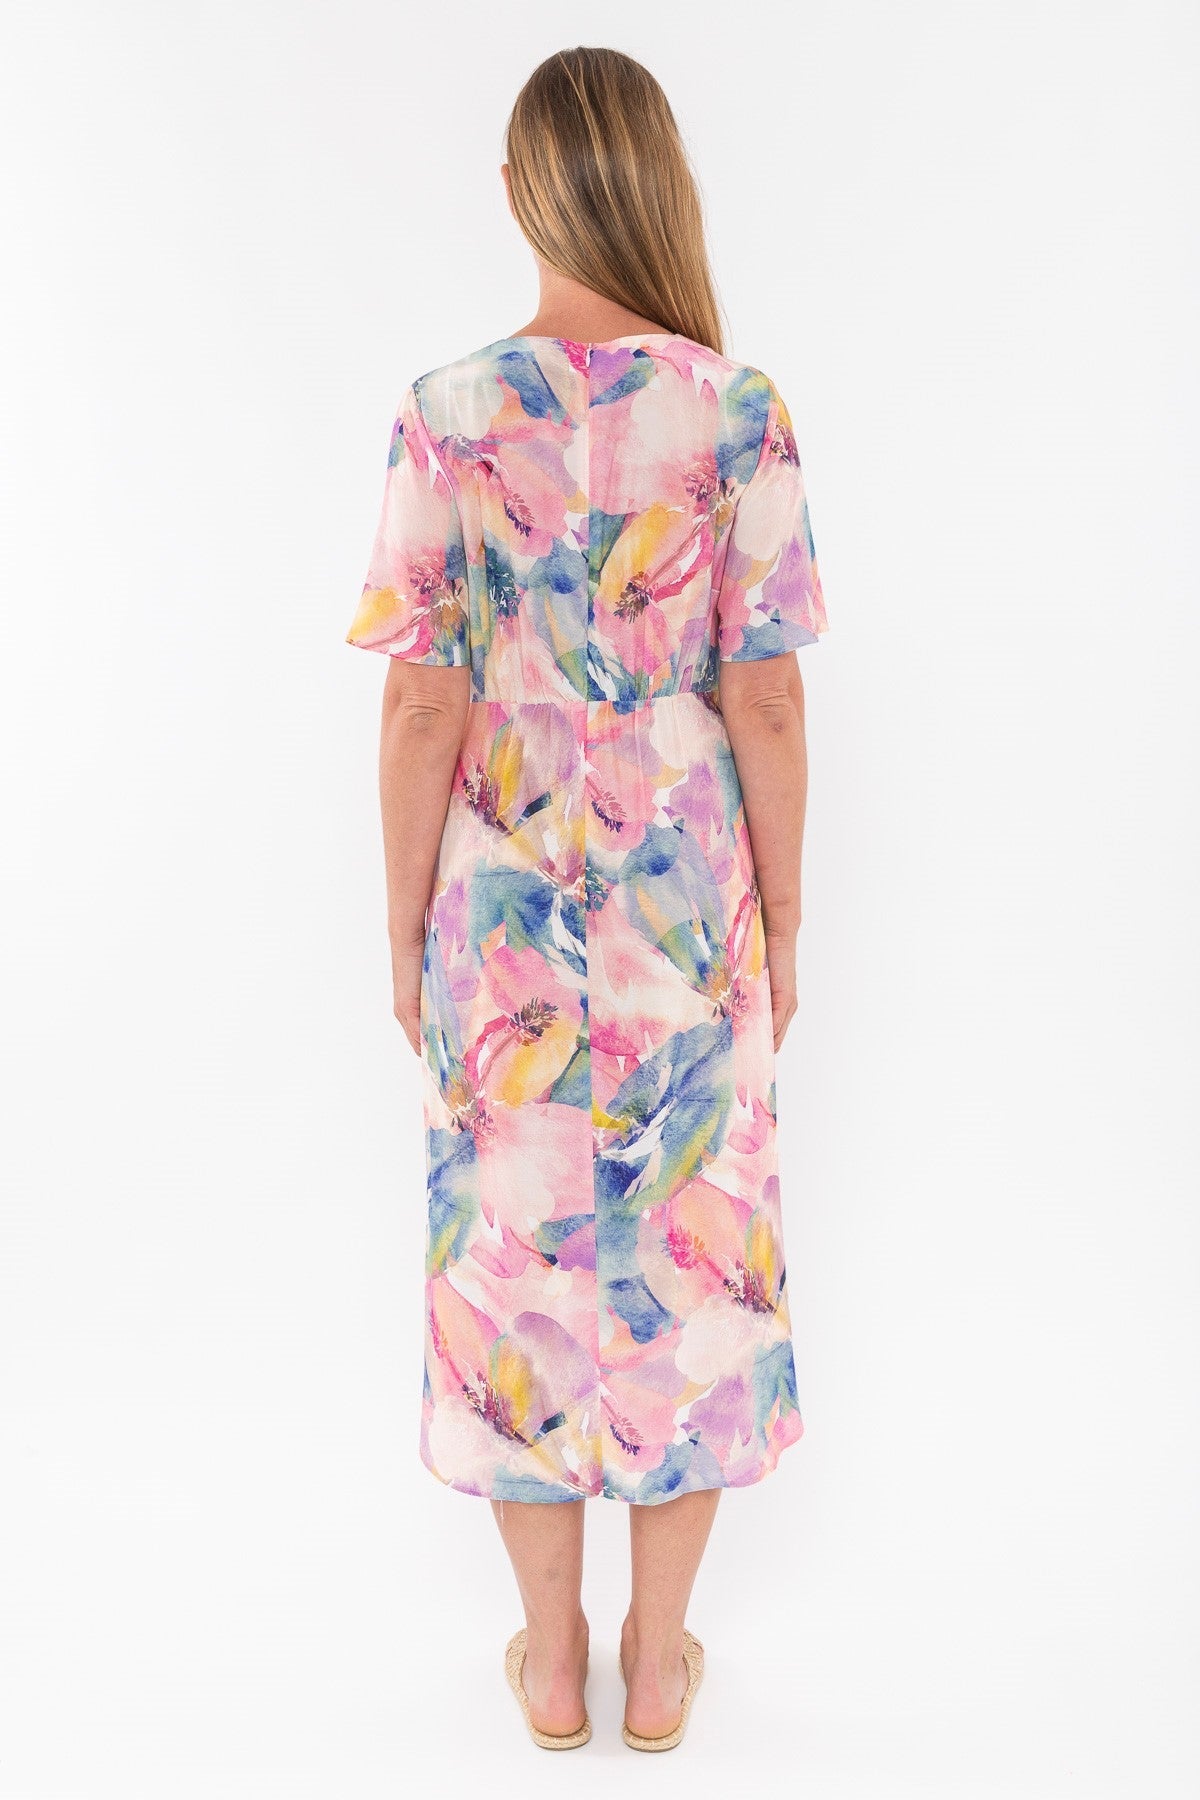 Watercolour Bloom Dress - Sare StoreJumpDress